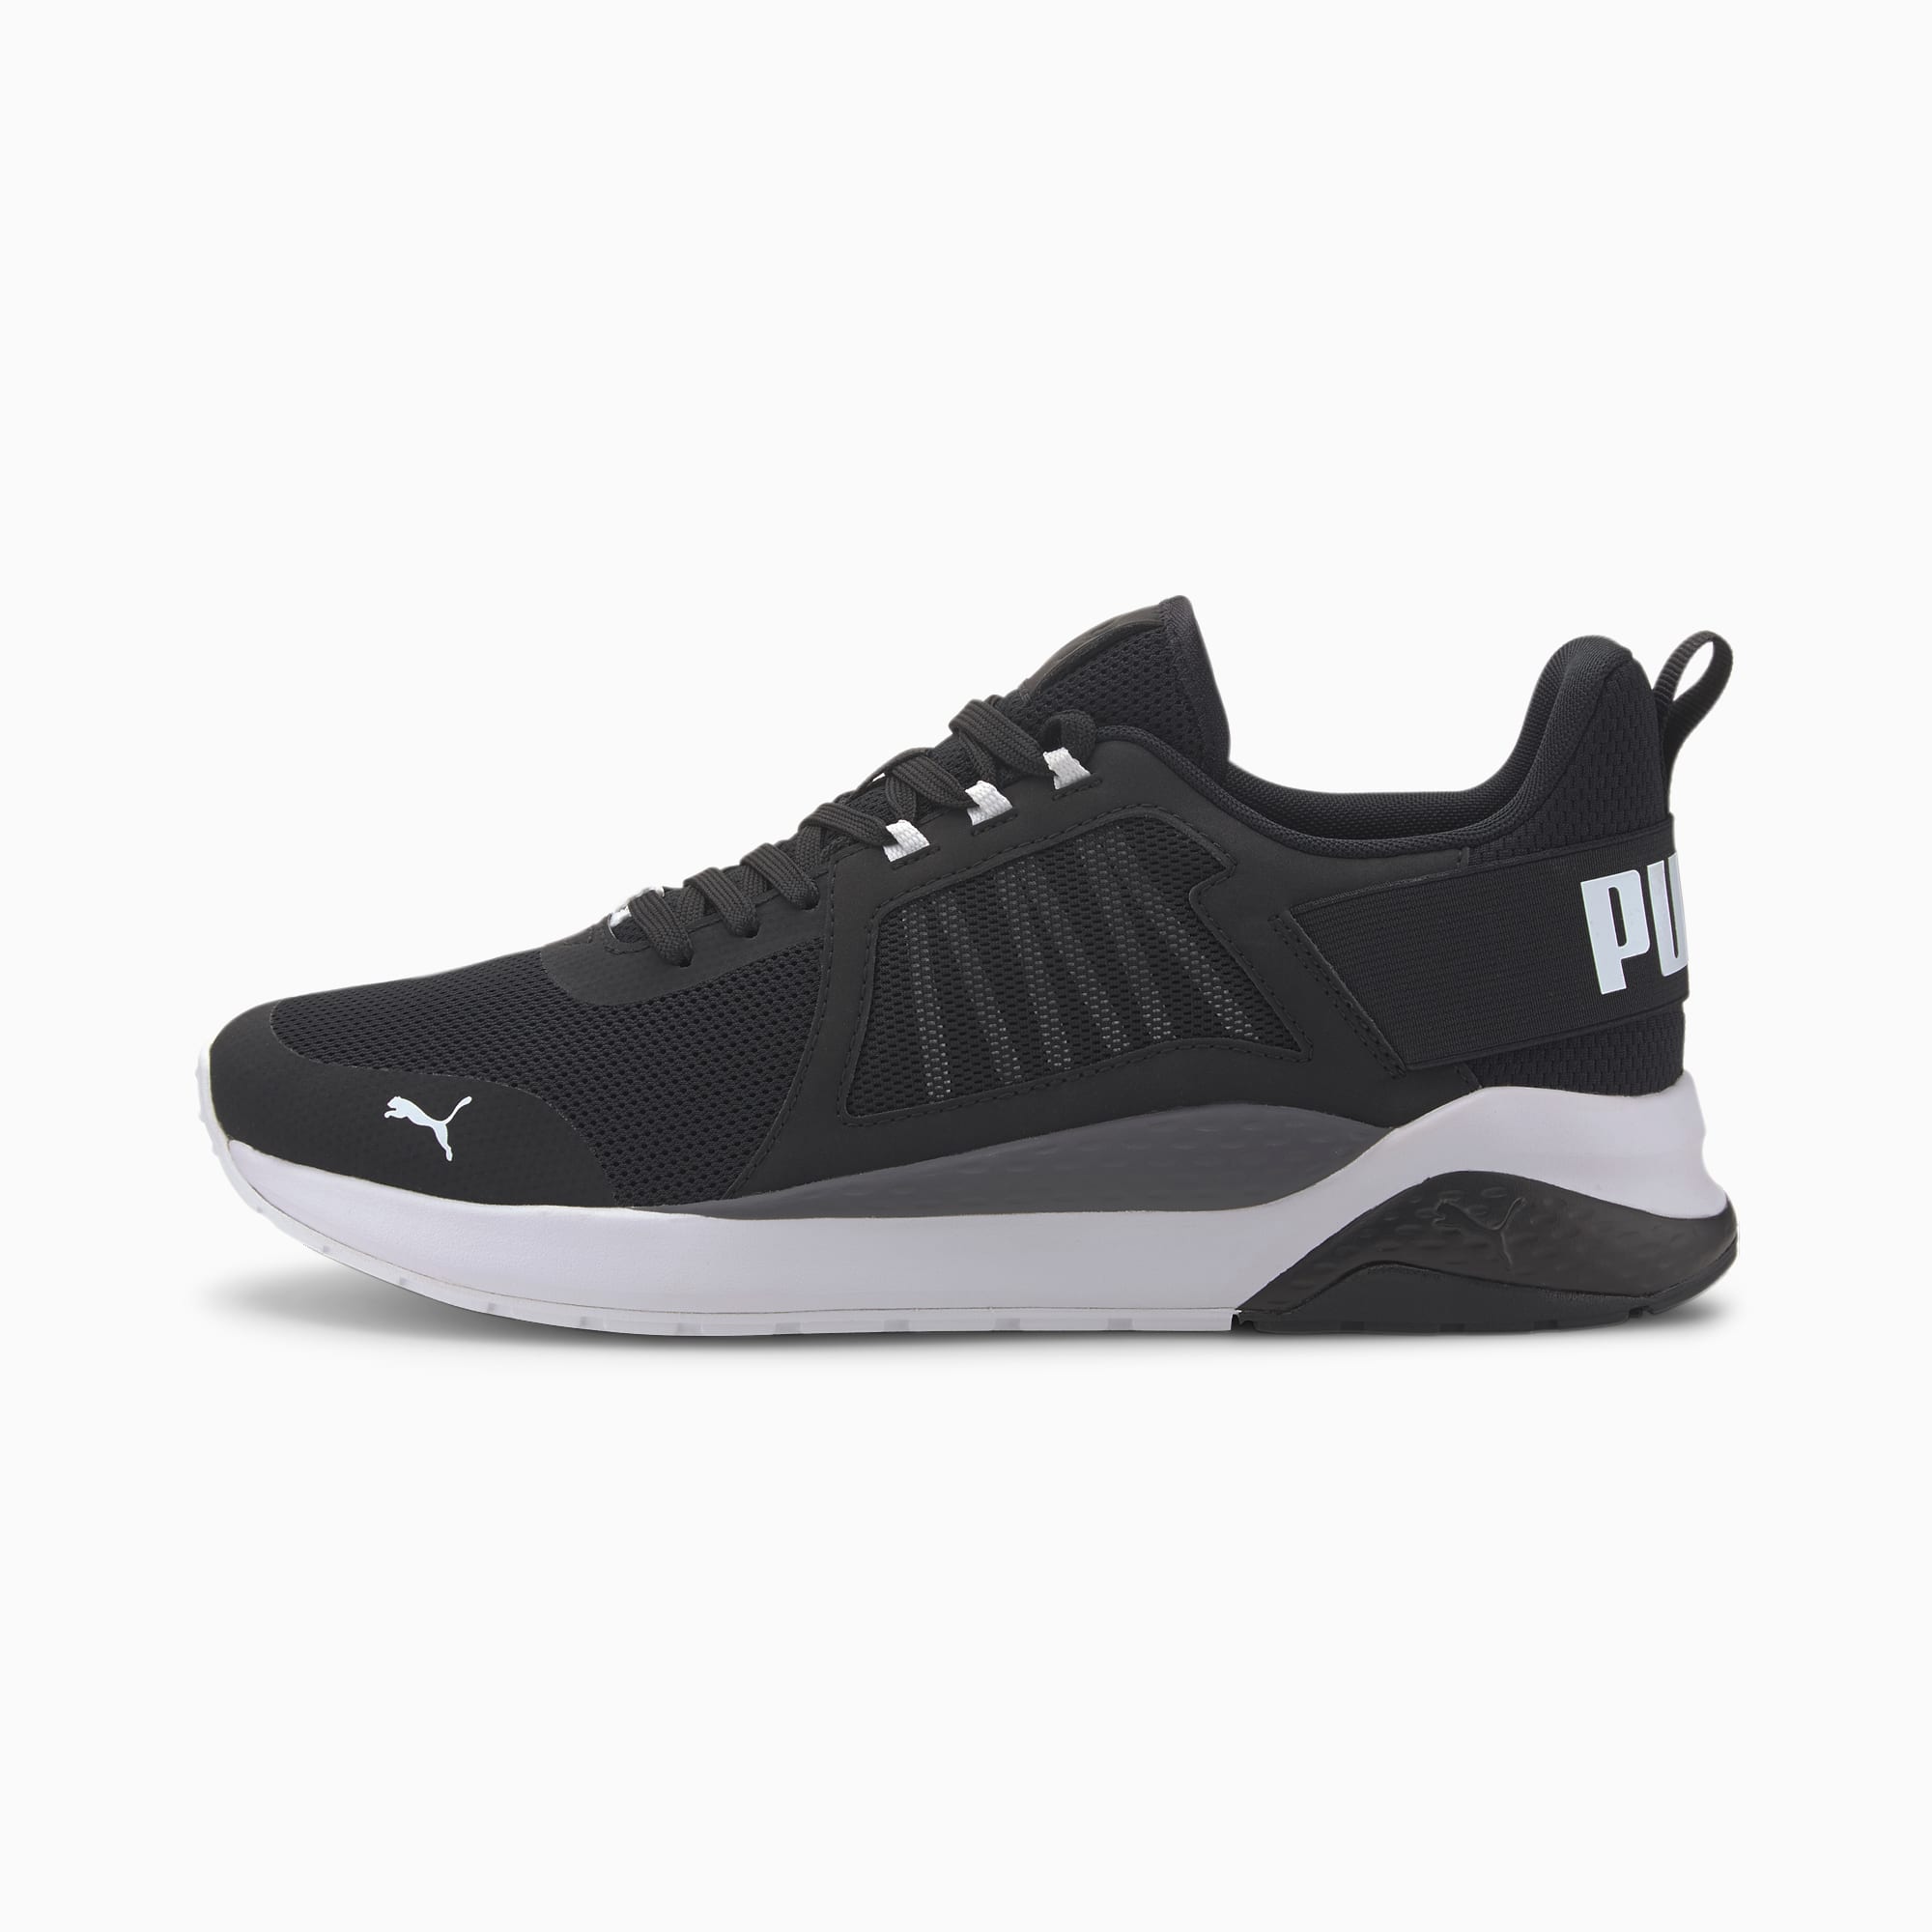 PUMA Chaussure Basket Anzarun pour Homme, Noir/Blanc, Taille 44.5, Chaussures